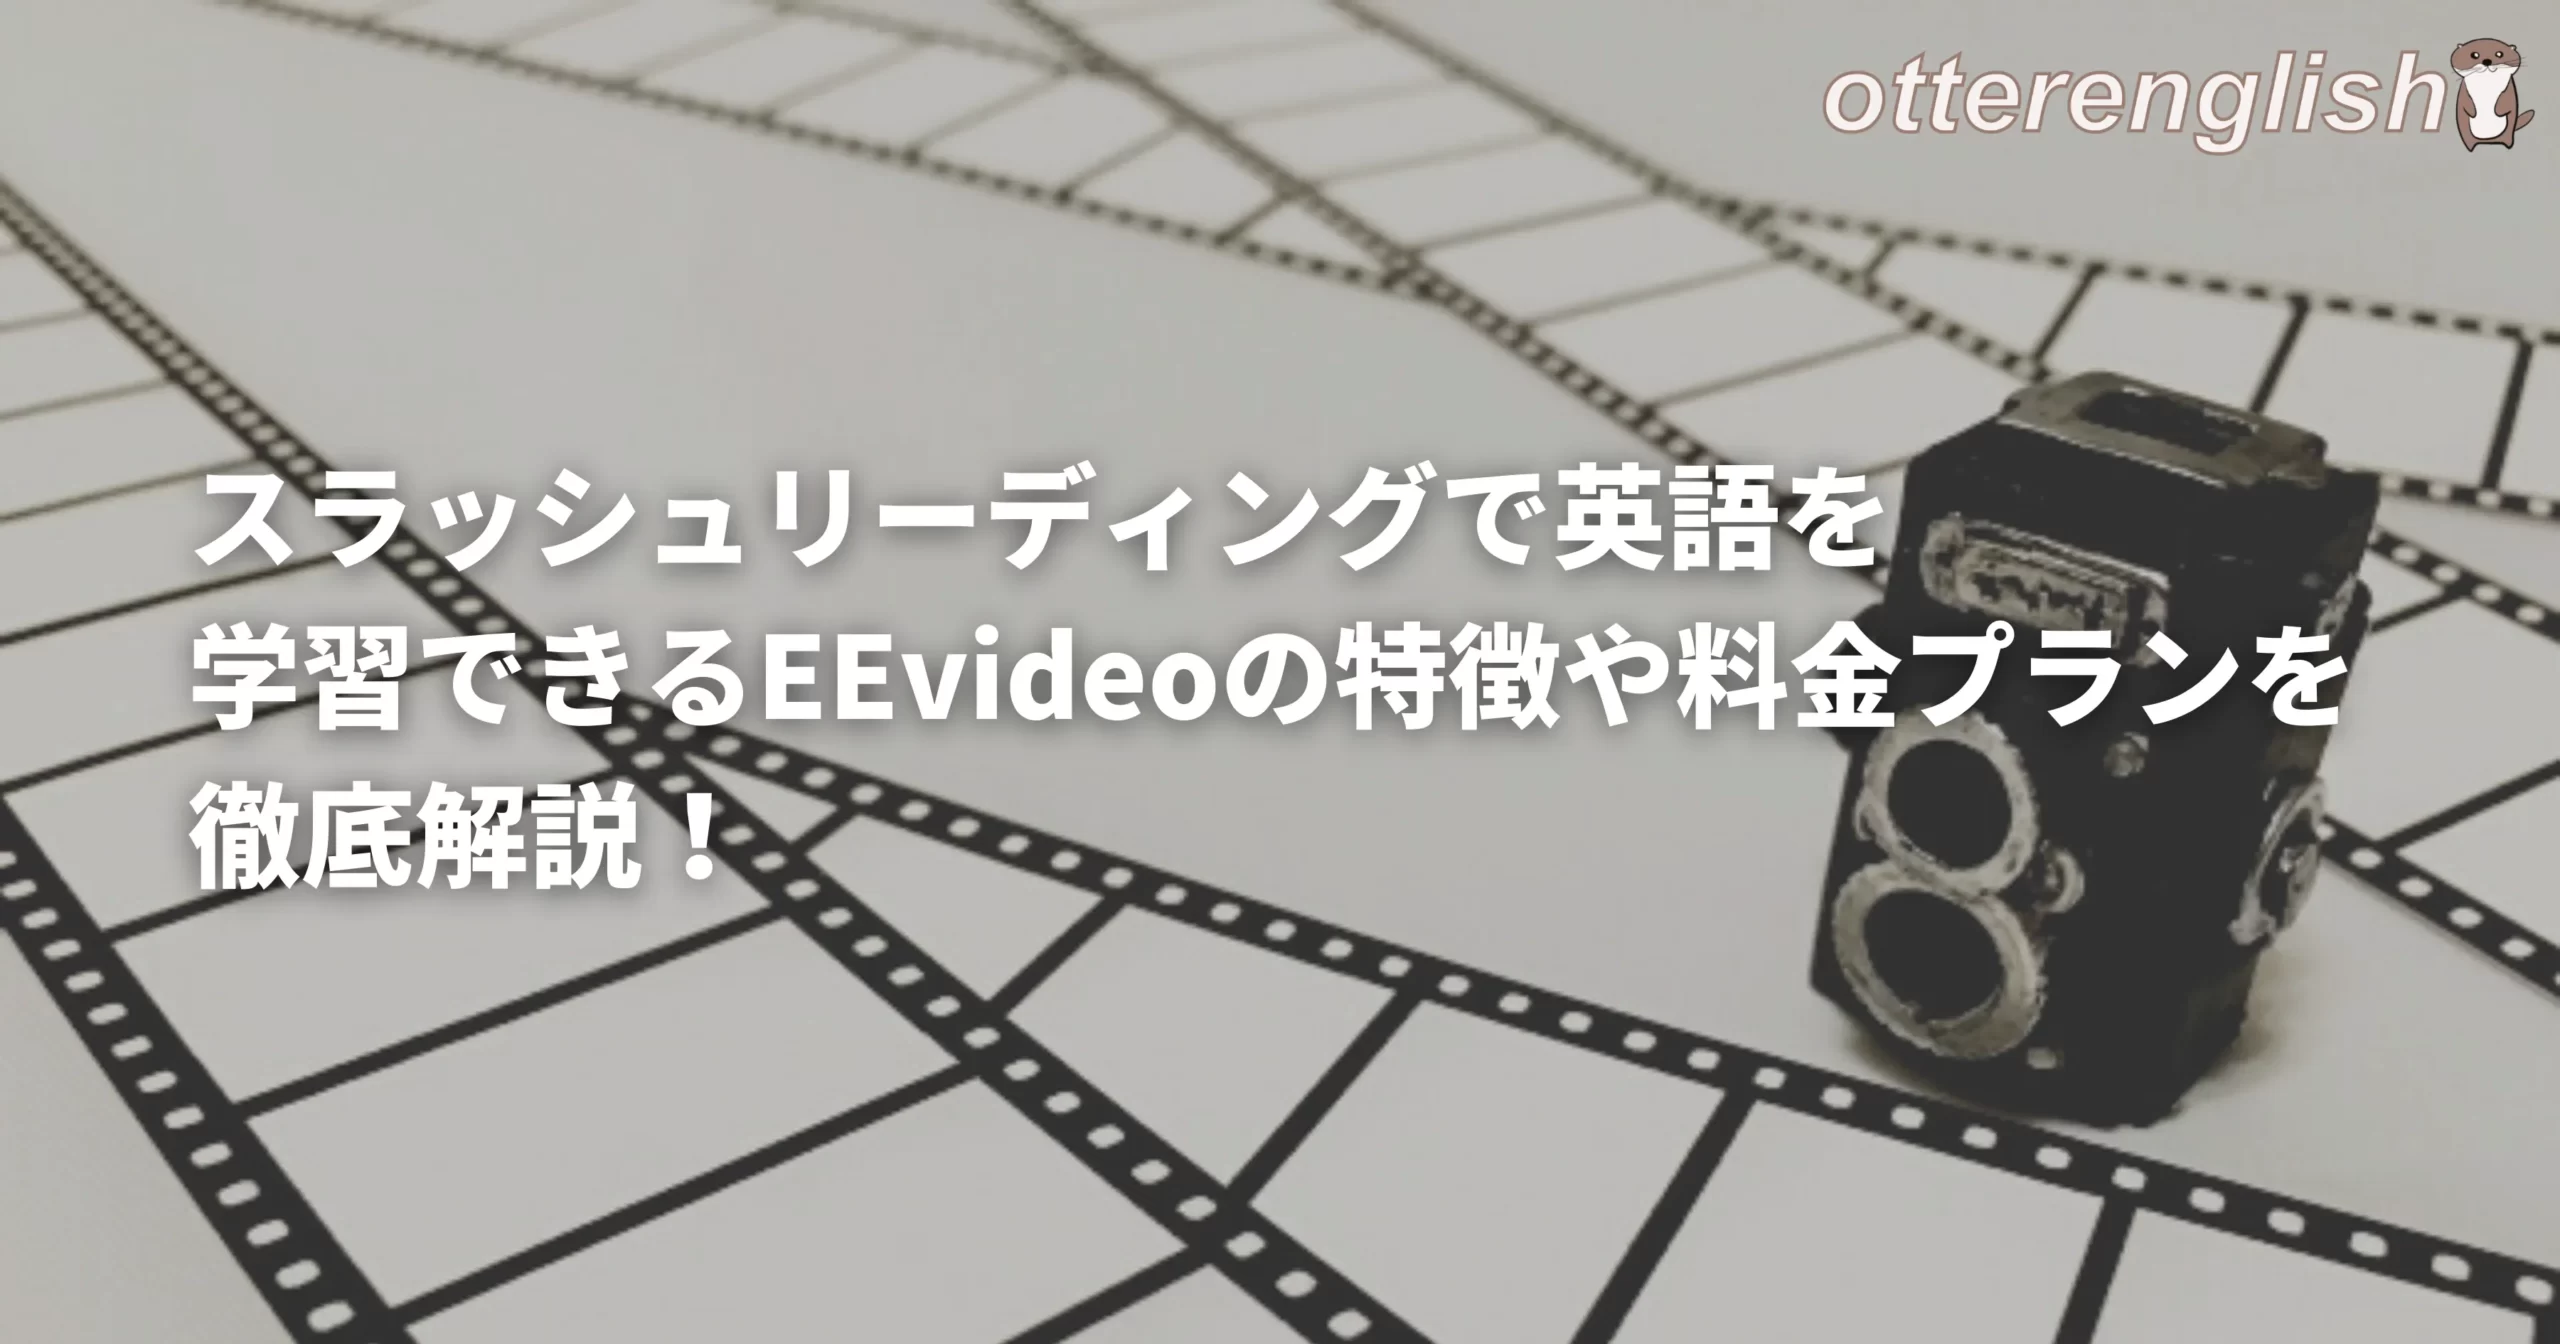 EEVideoで使用できる動画を表した画像